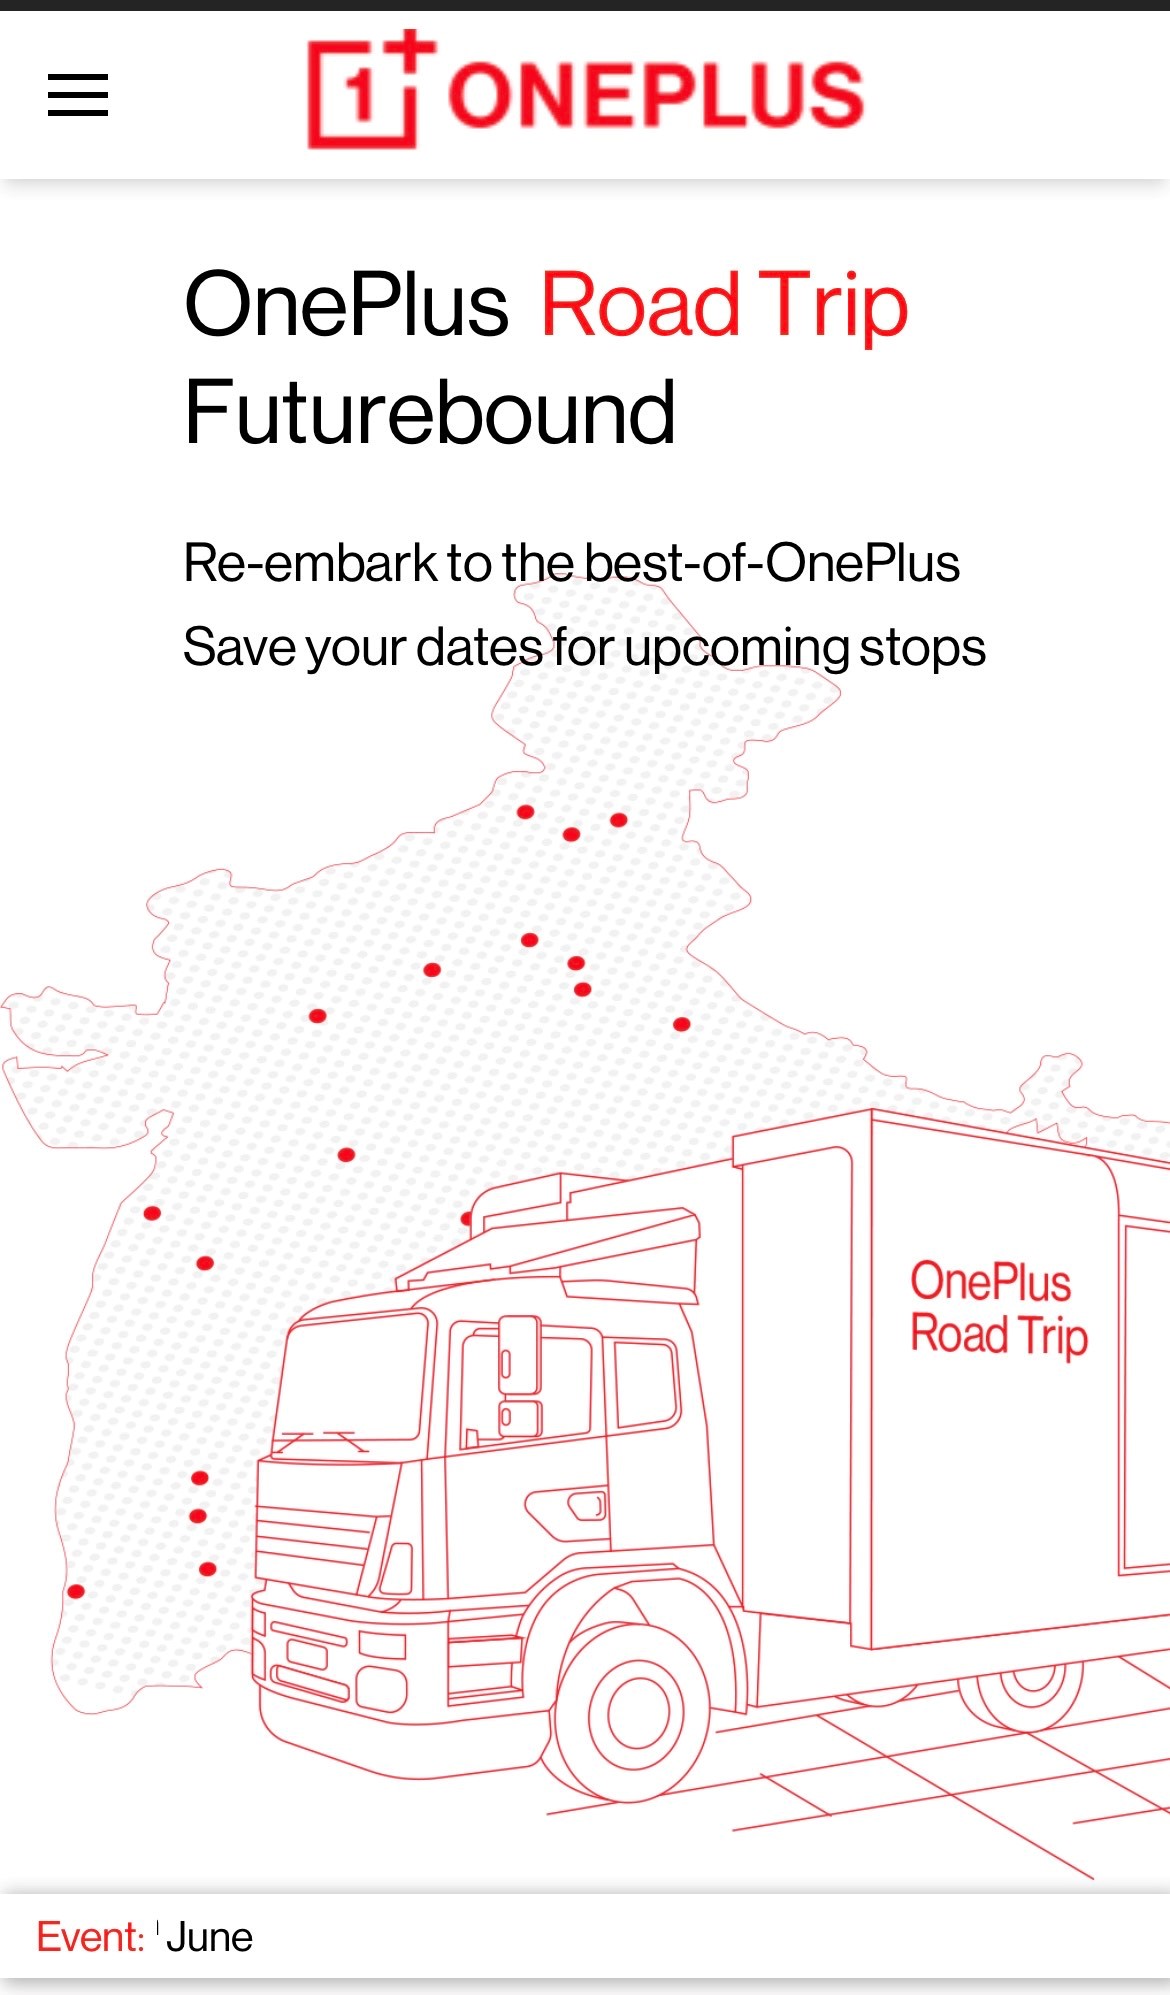  OnePlus Road Trip